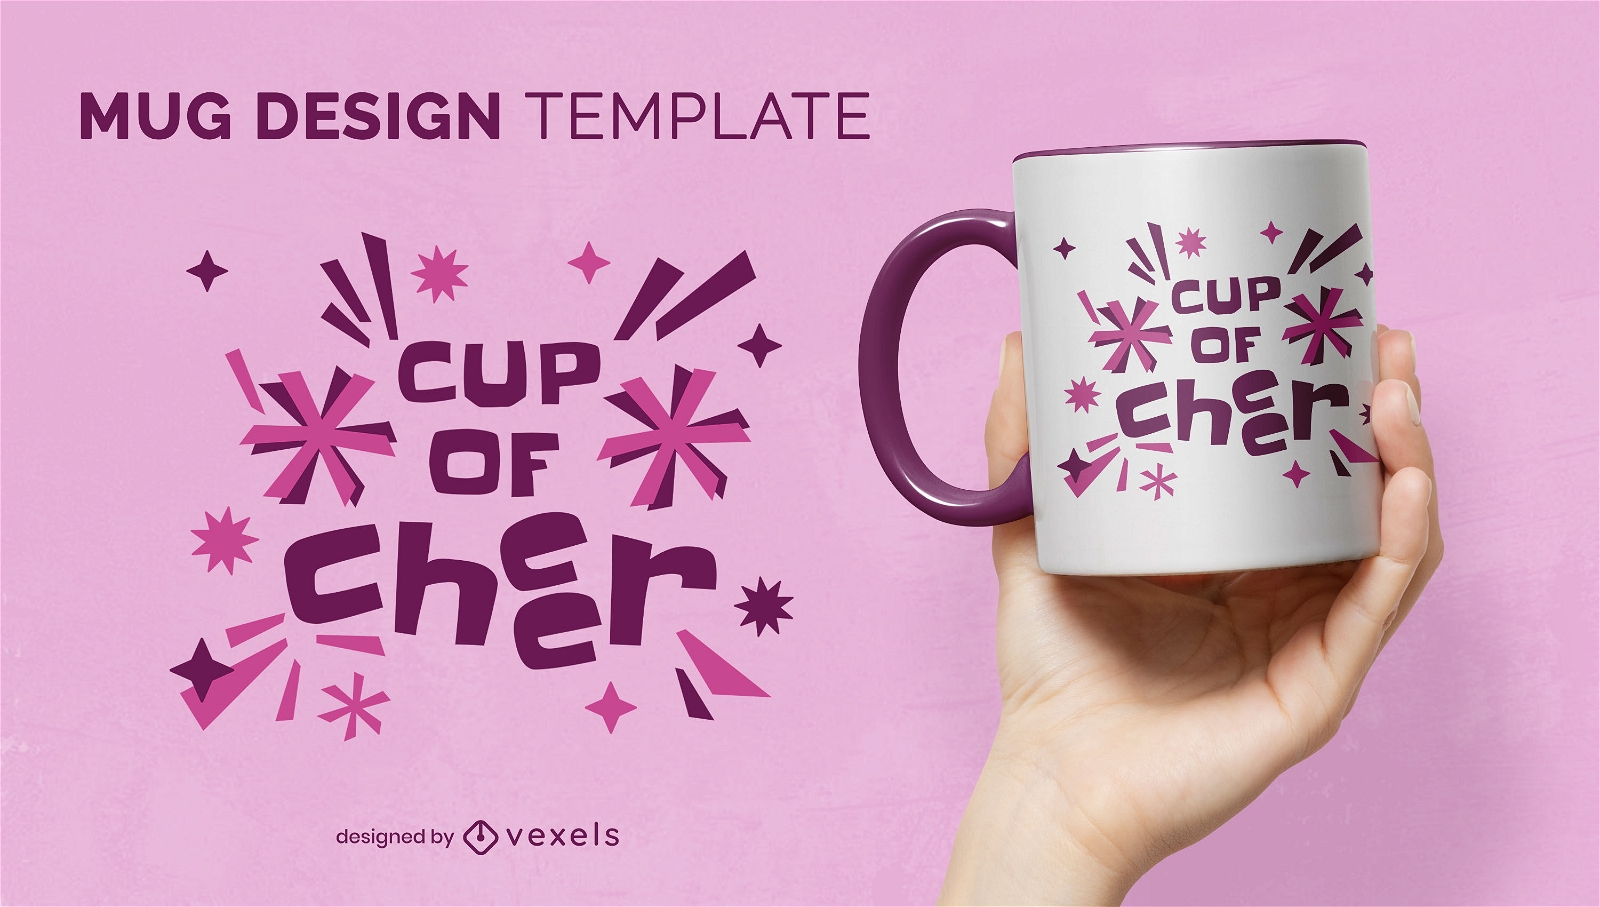 Cup of cheer mug design